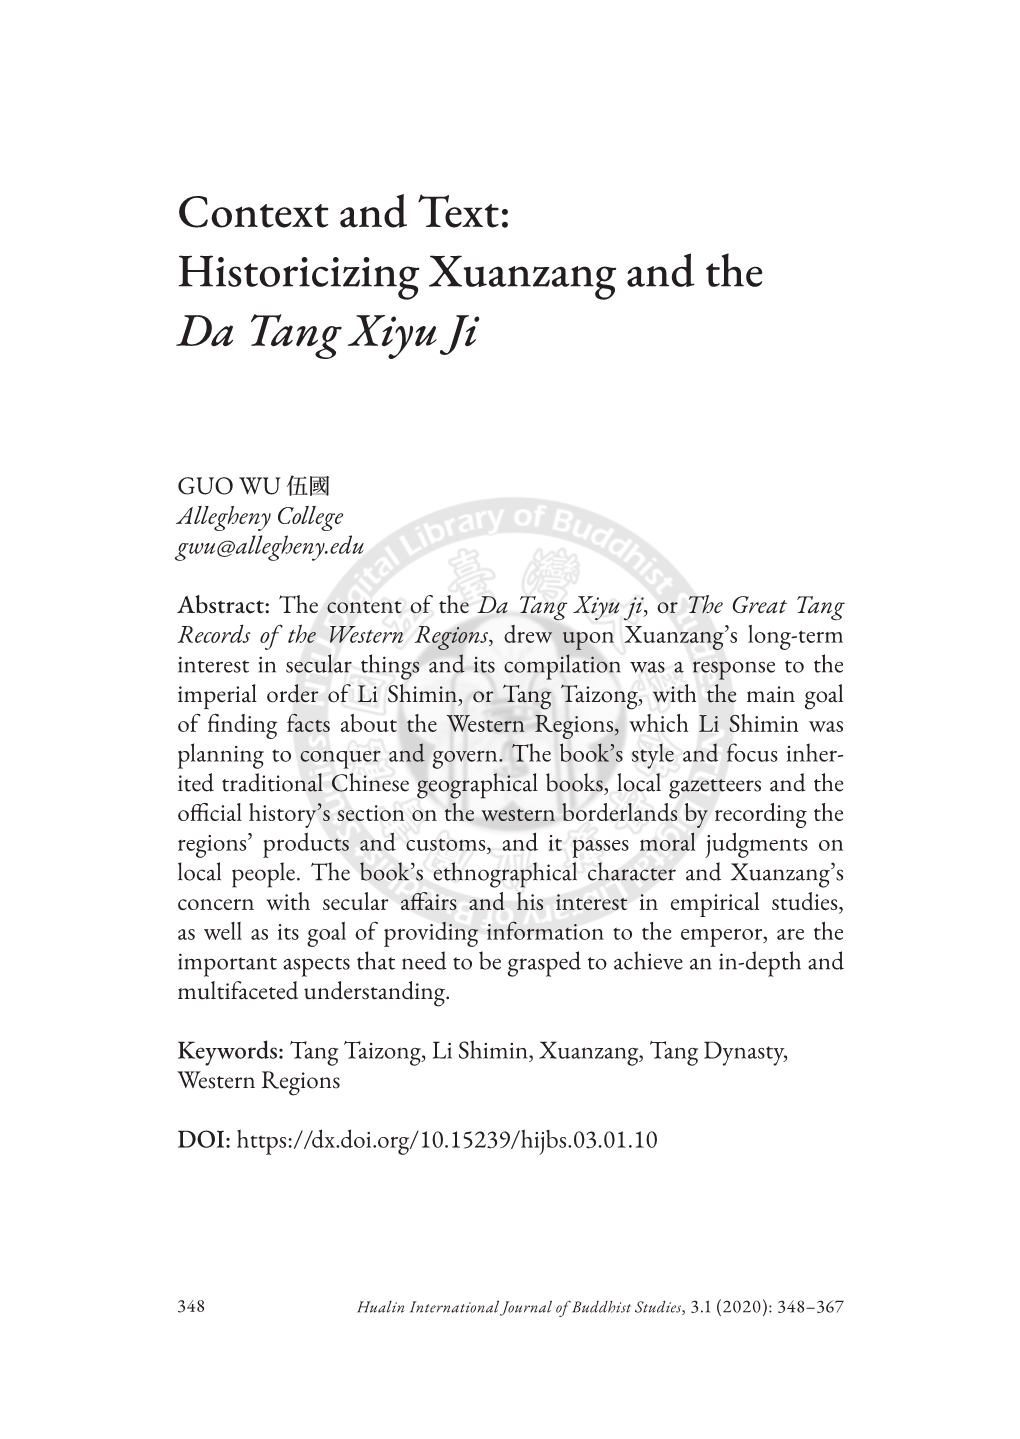 Context and Text: Historicizing Xuanzang and the Da Tang Xiyu Ji